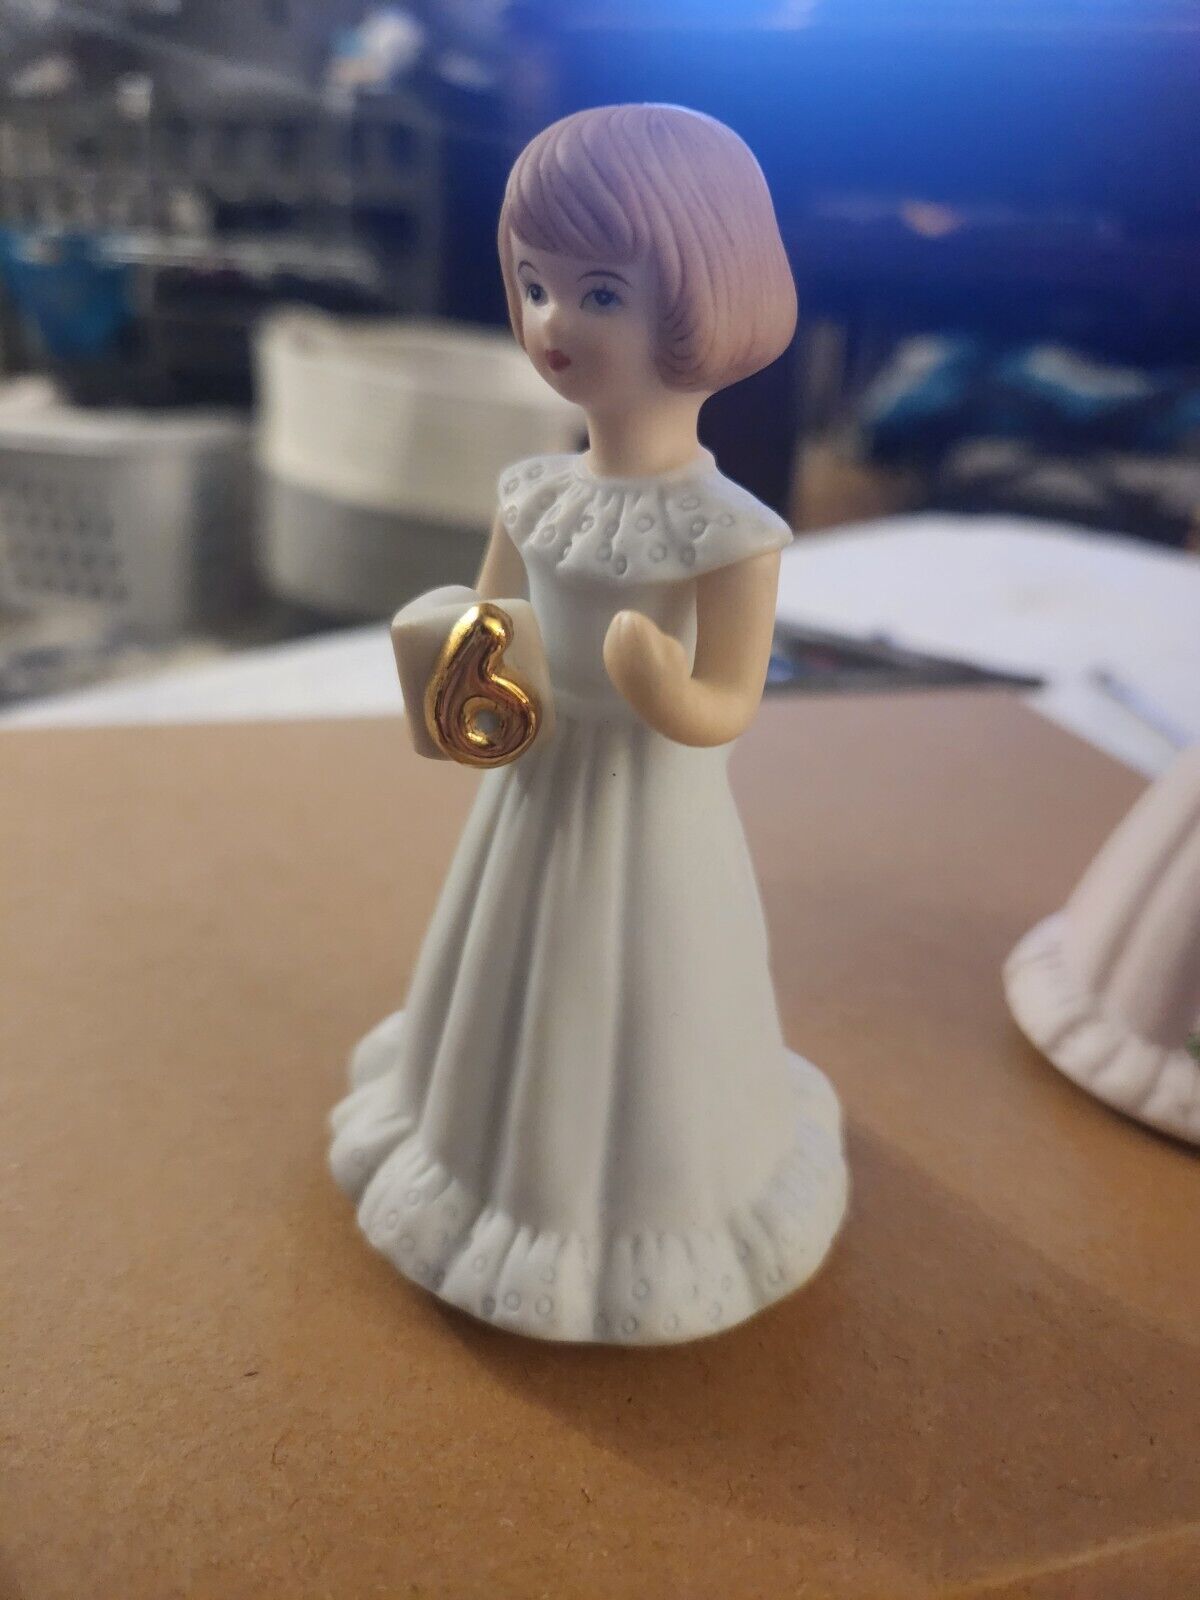 1982 Vintage Enesco Porcelain Growing Up Birthday Girl Figurine - Age 6